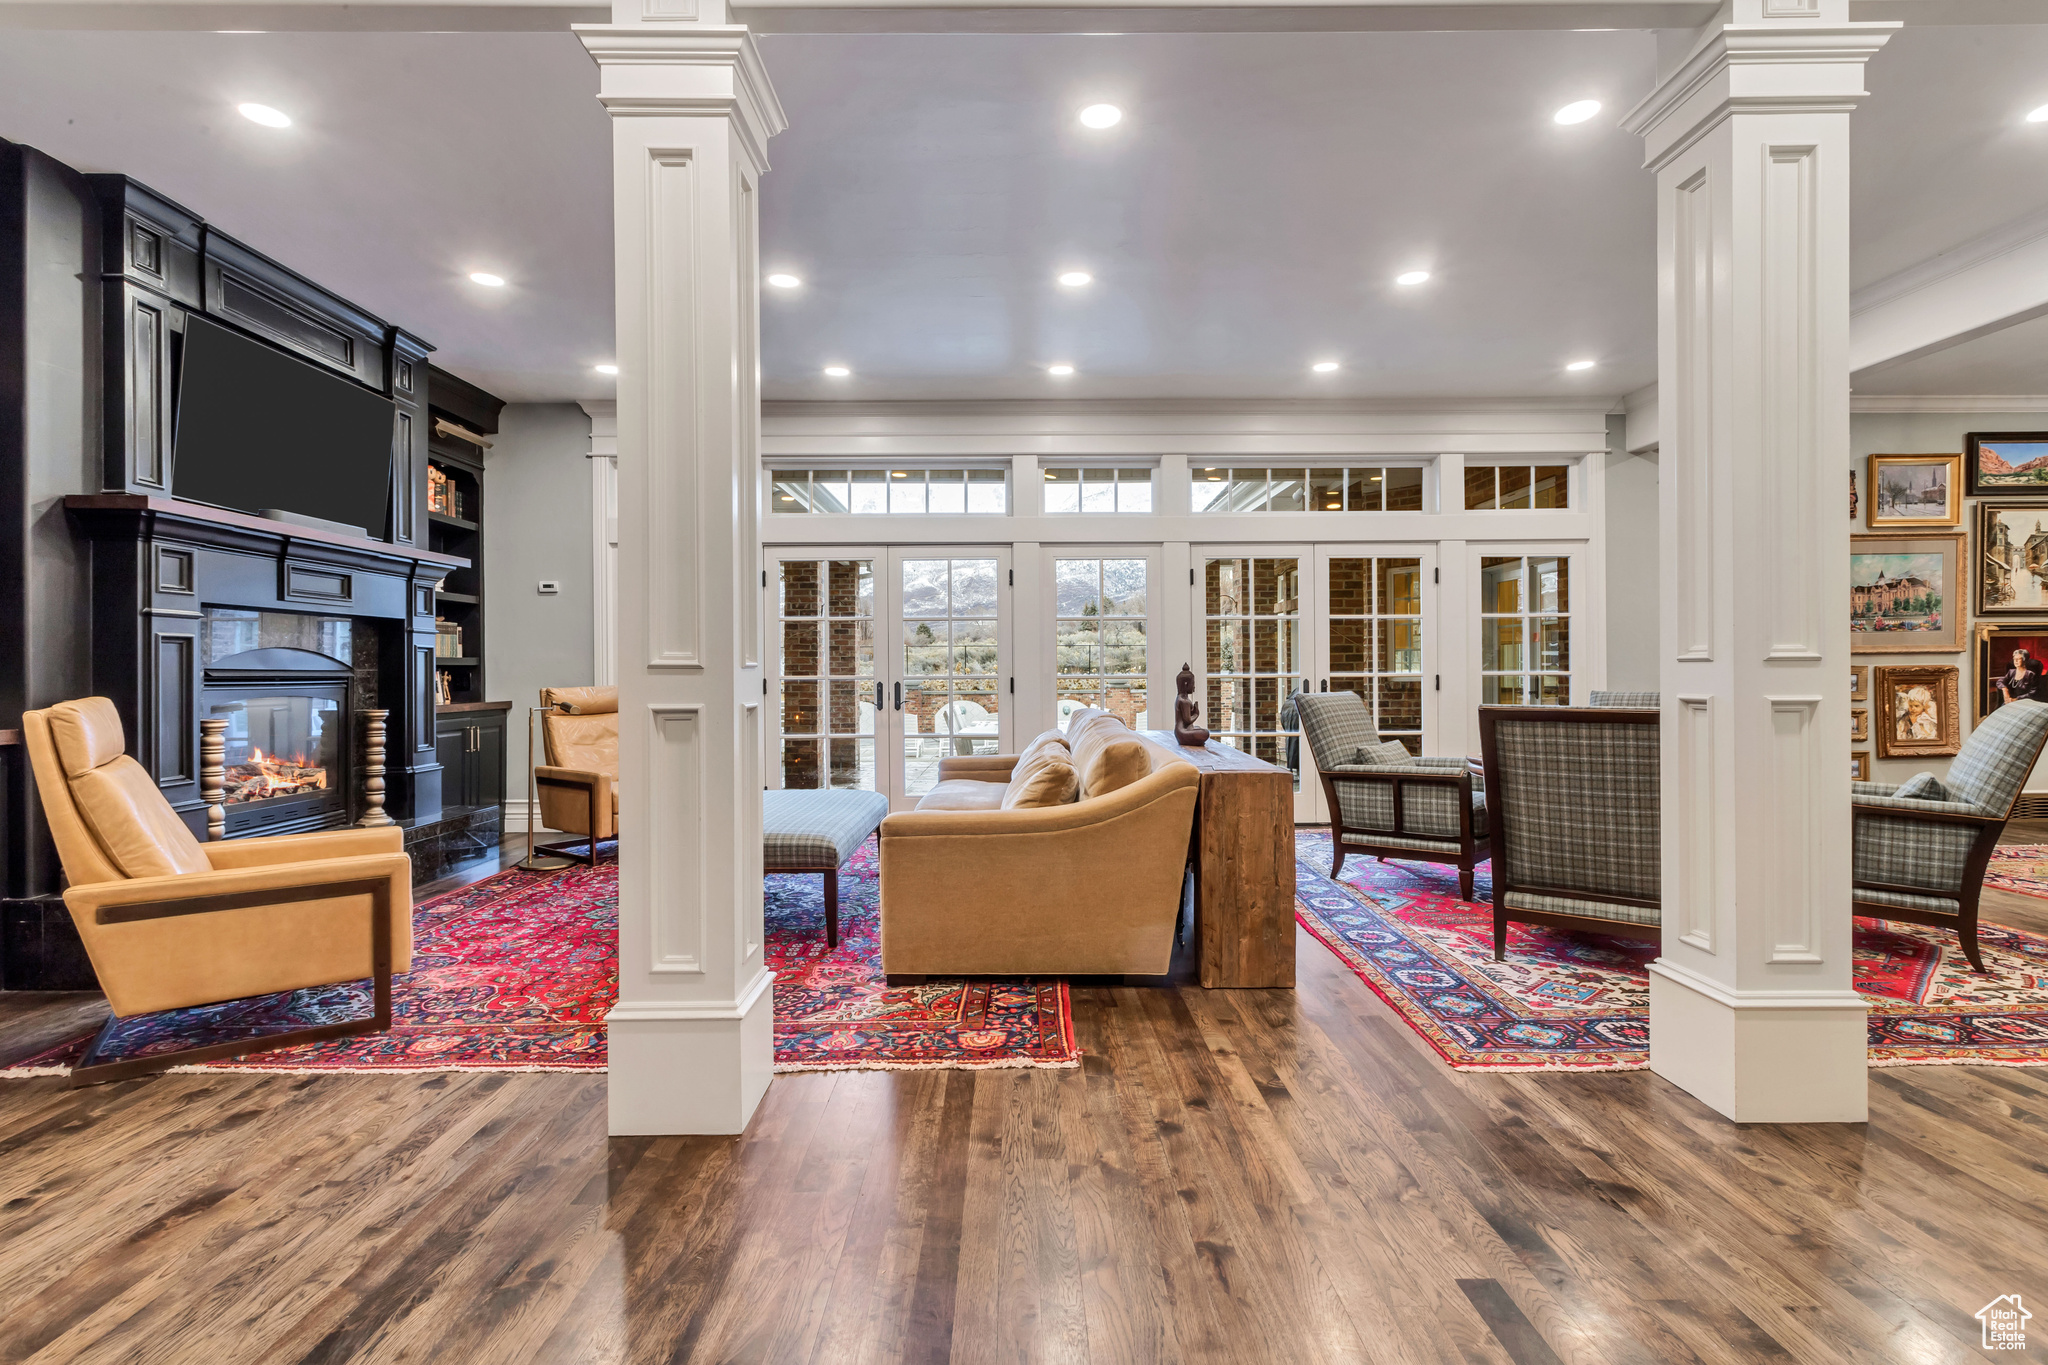 Living room with dark hardwood / wood floors, ornamental molding, ornate columns, and french doors